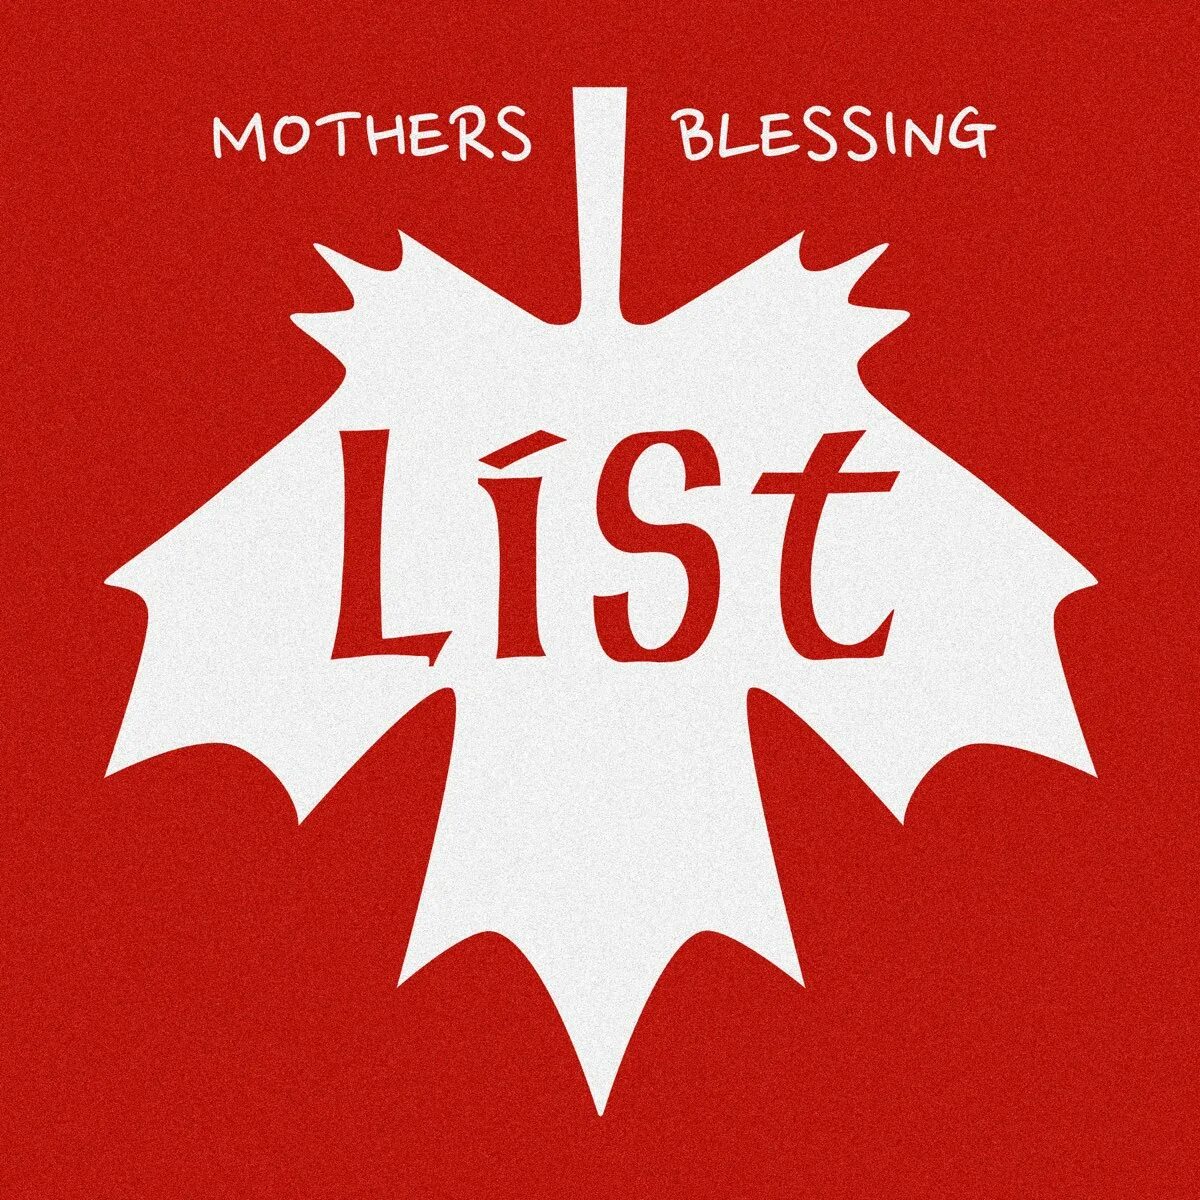 Single list. 50 Blessings list.